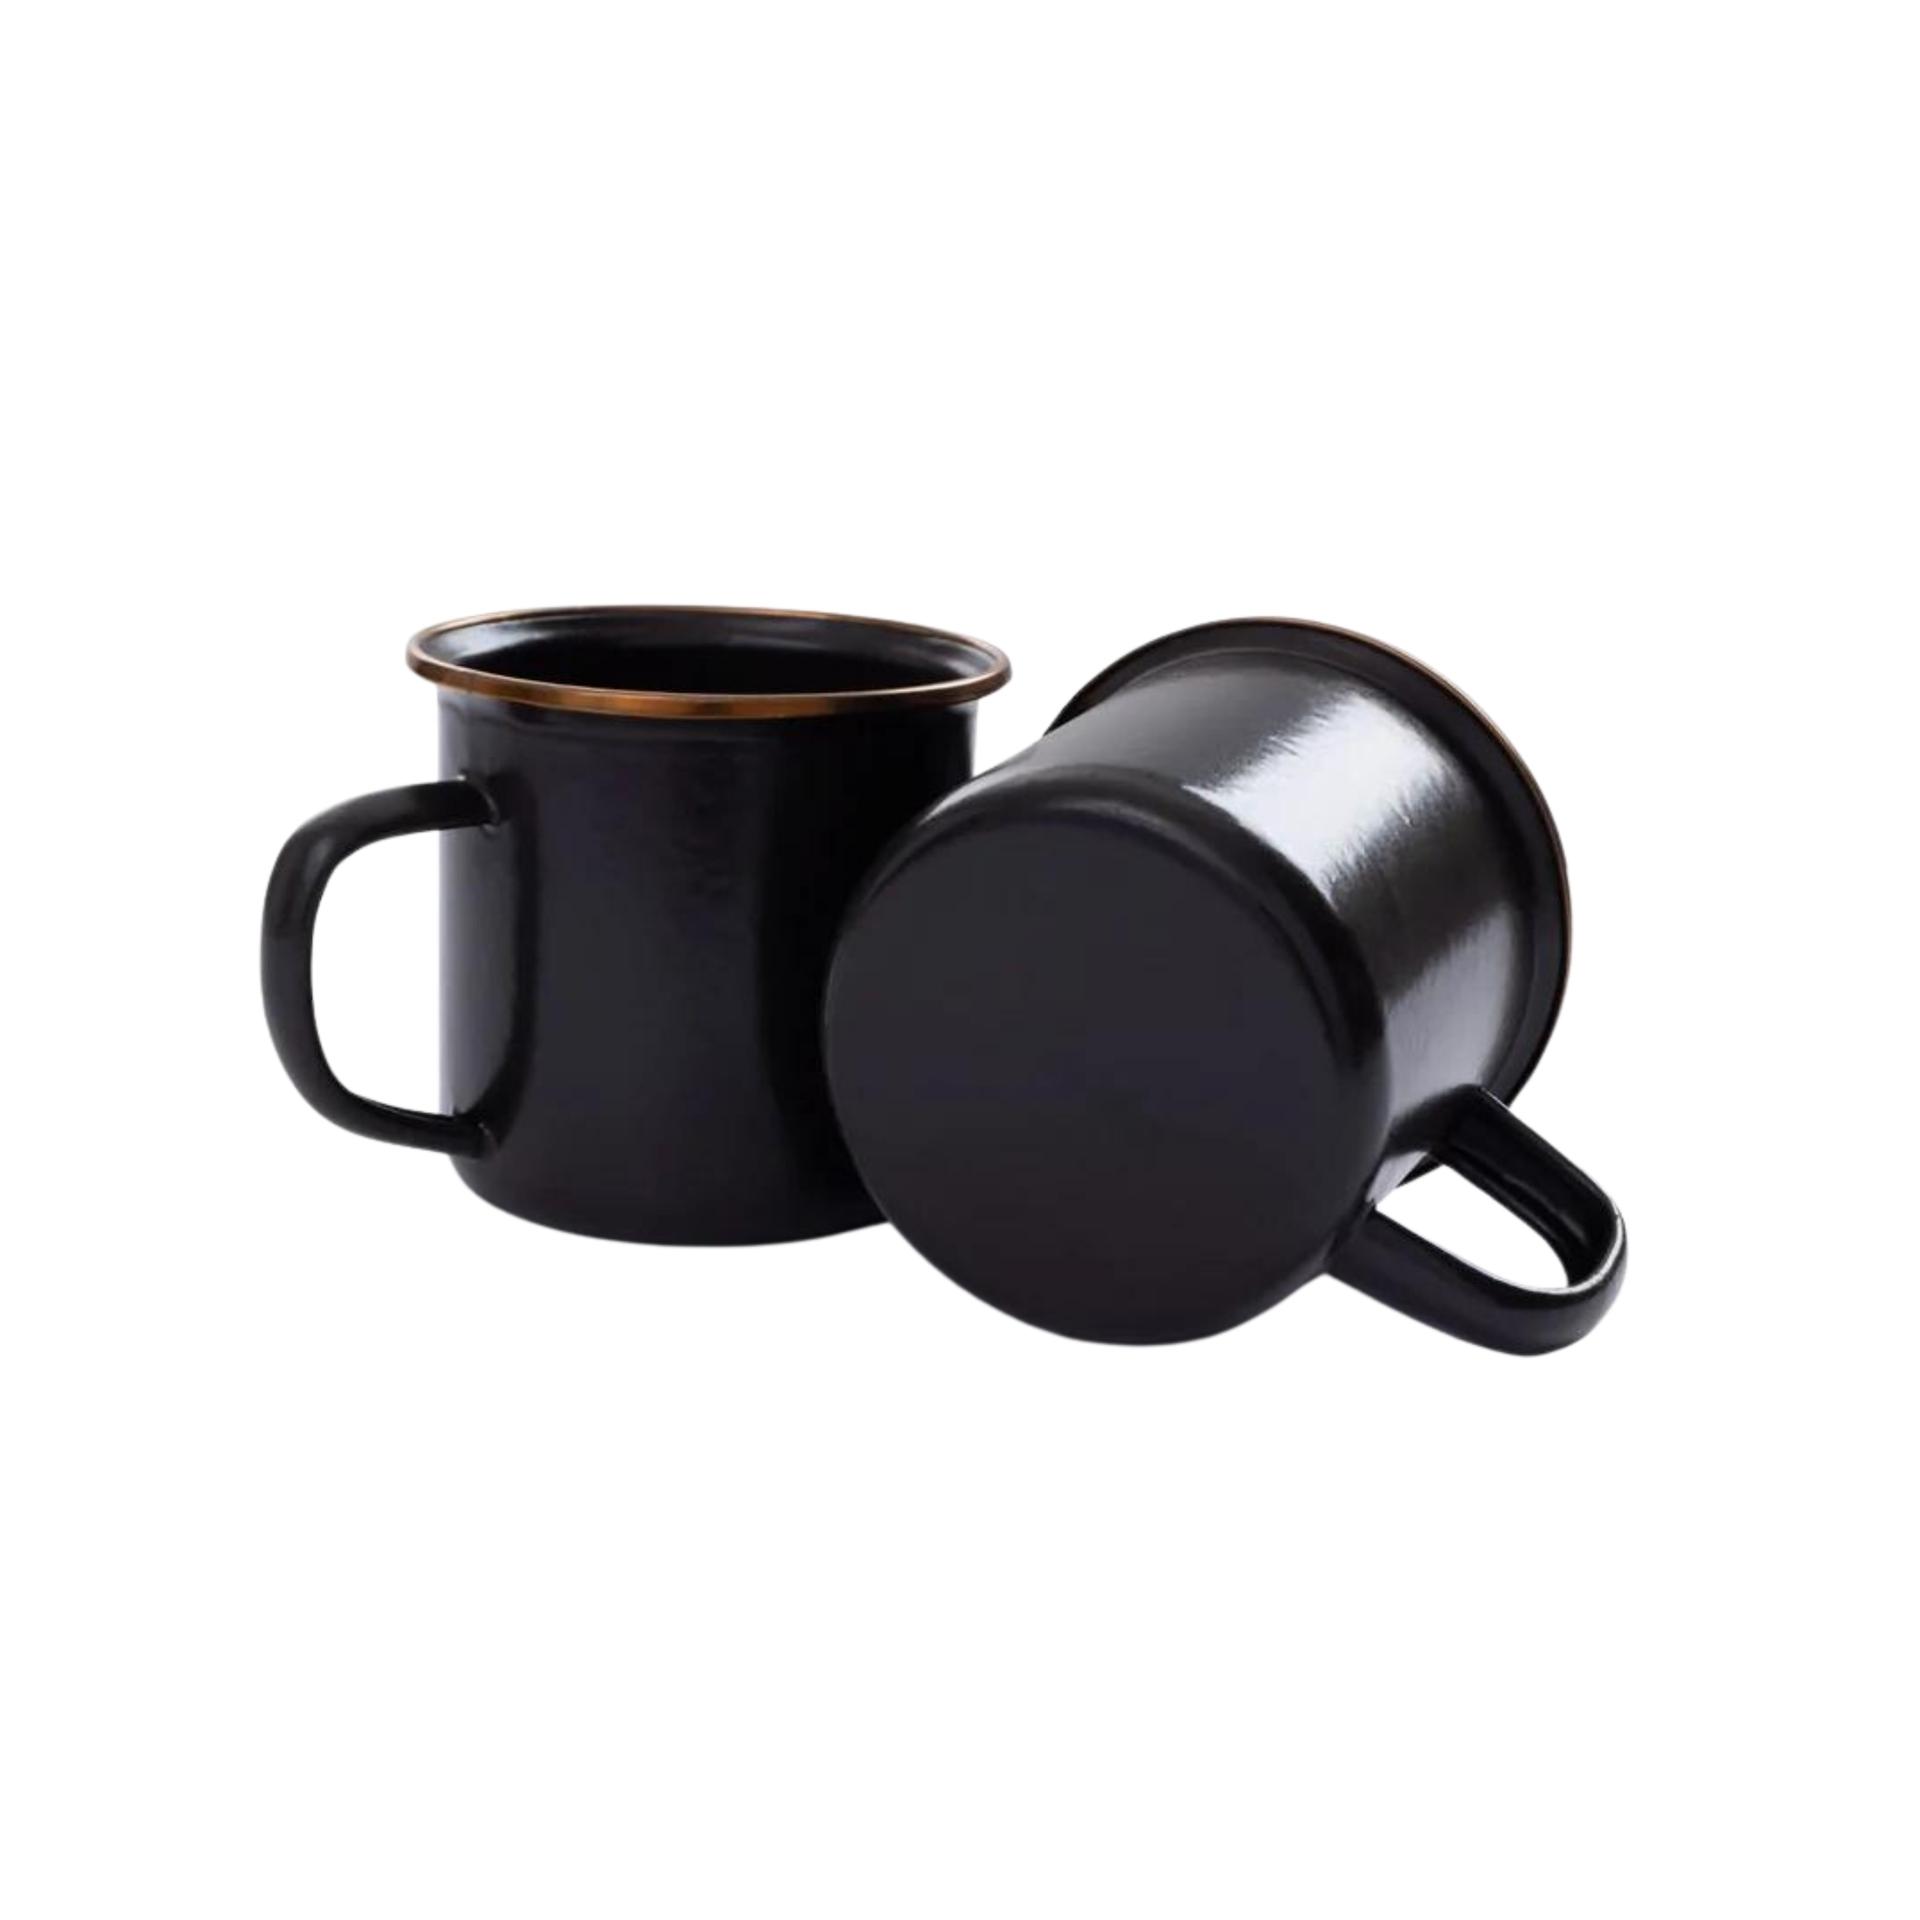 BAREBONES Enamel Espresso Cup 搪瓷濃縮咖啡杯 - 2 件套